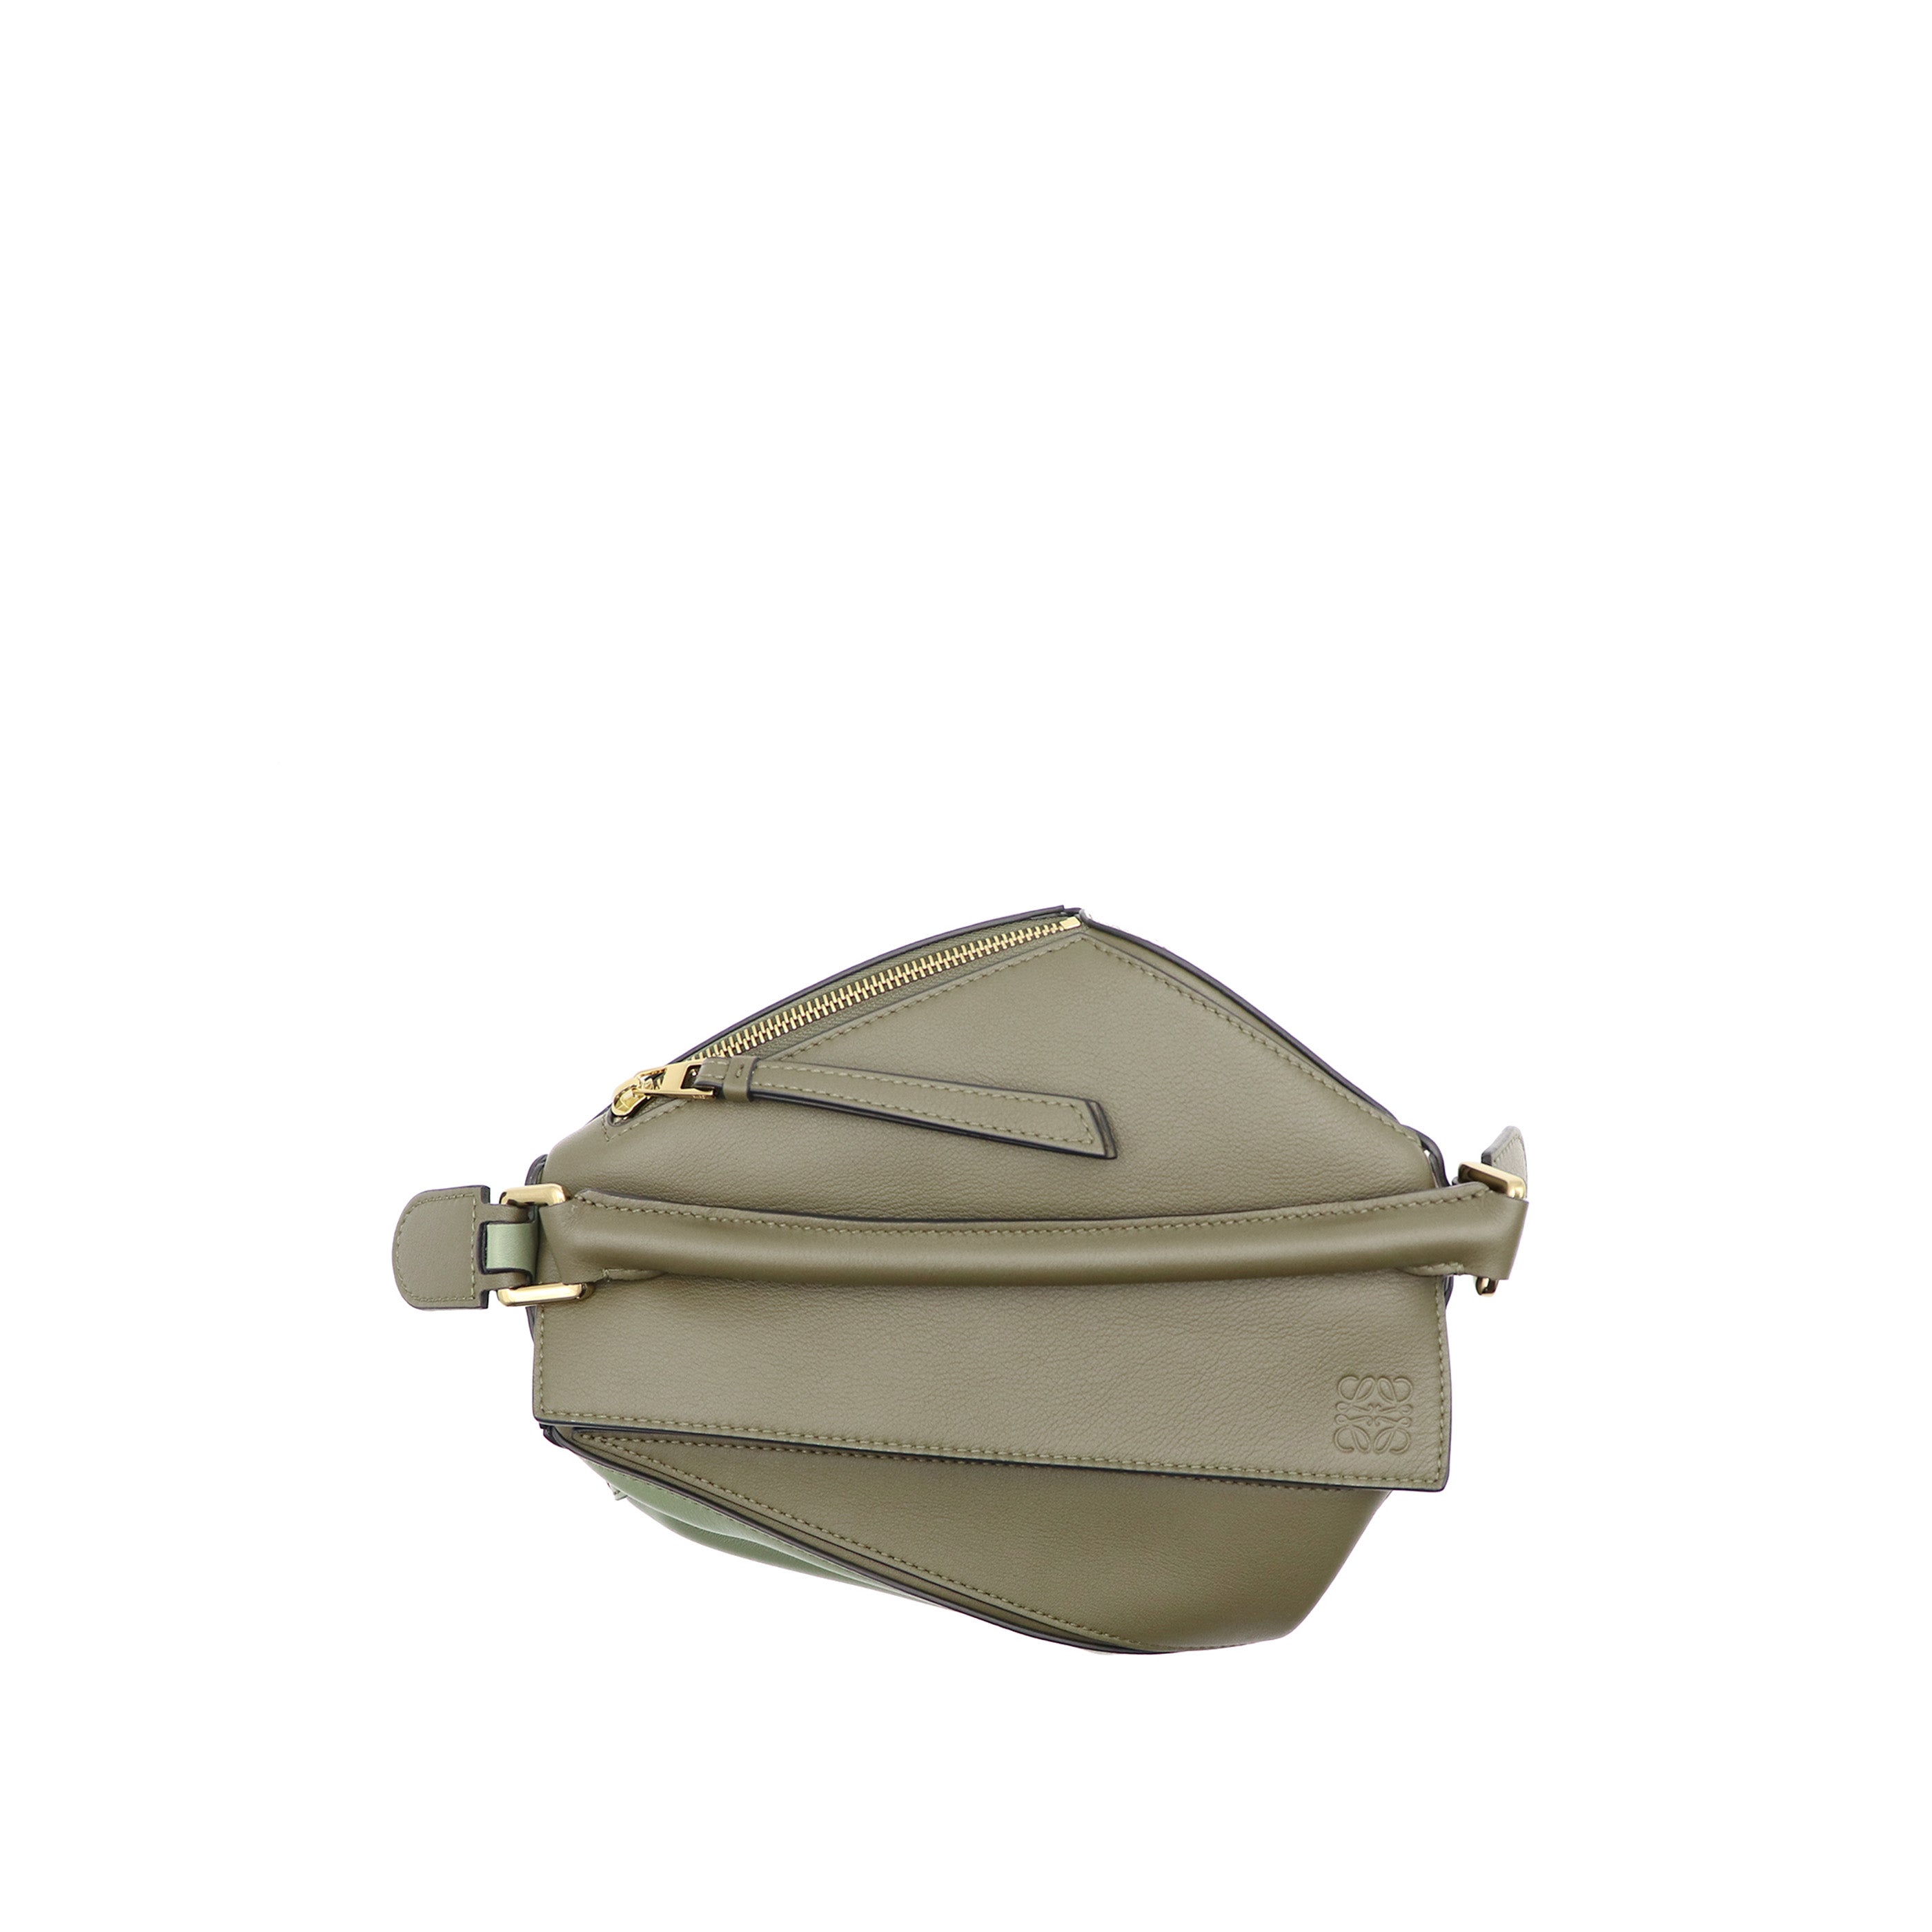 LOEWE Small Puzzle Bag in Classic Calfskin in Green/Light Oat | MARAIS